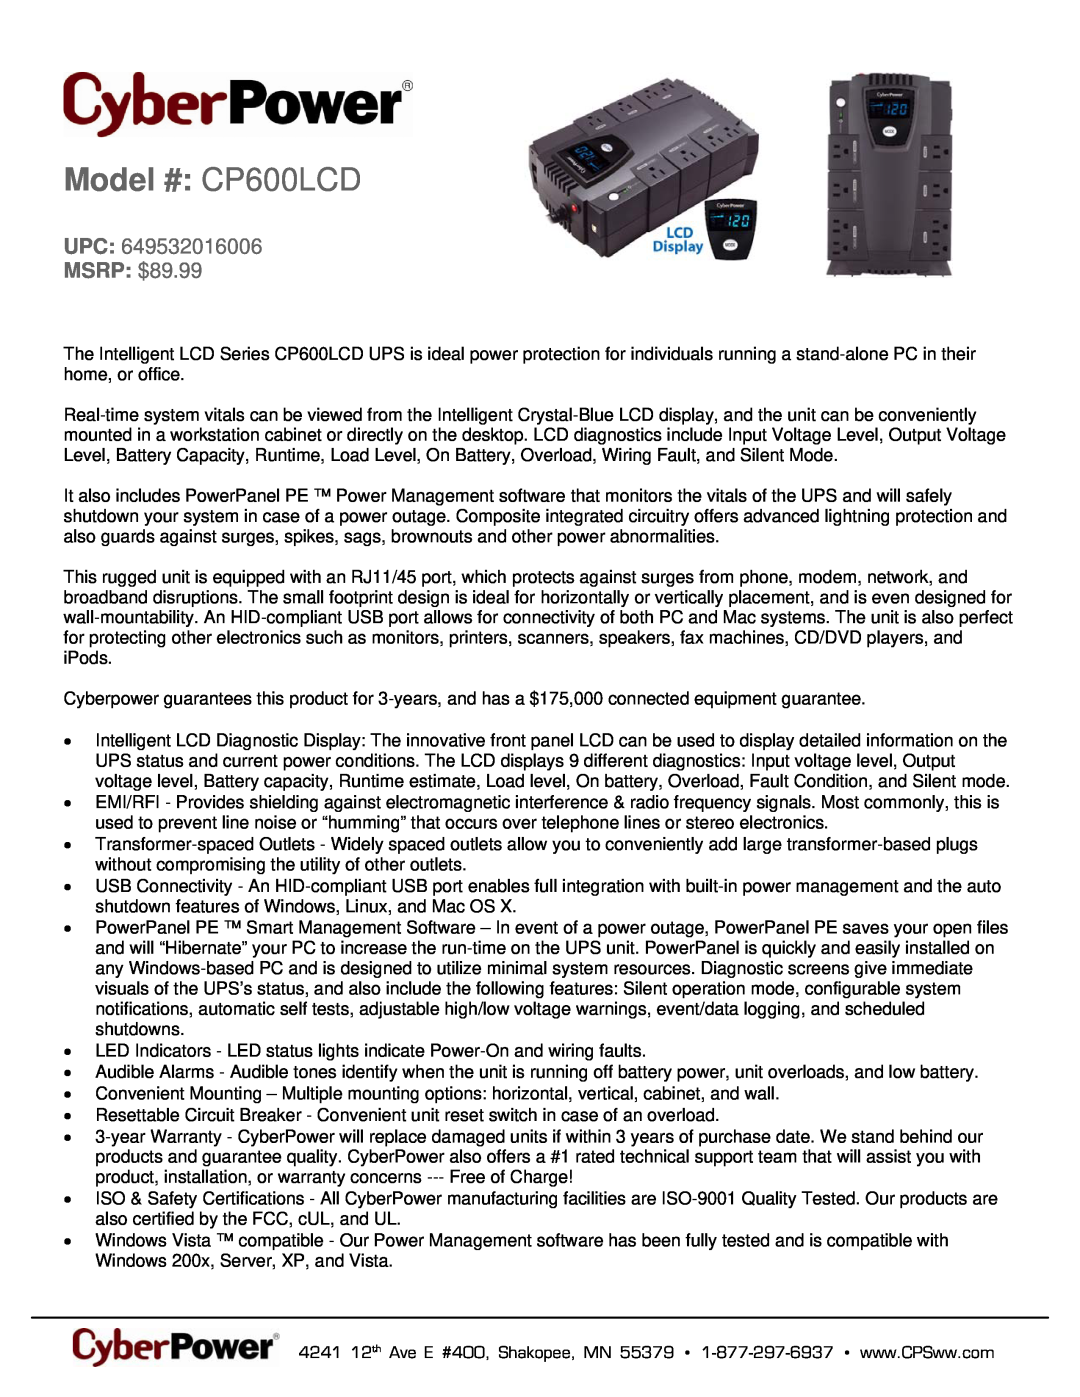 CyberPower Systems 649532016006 warranty Model # CP600LCD, MSRP $89.99 